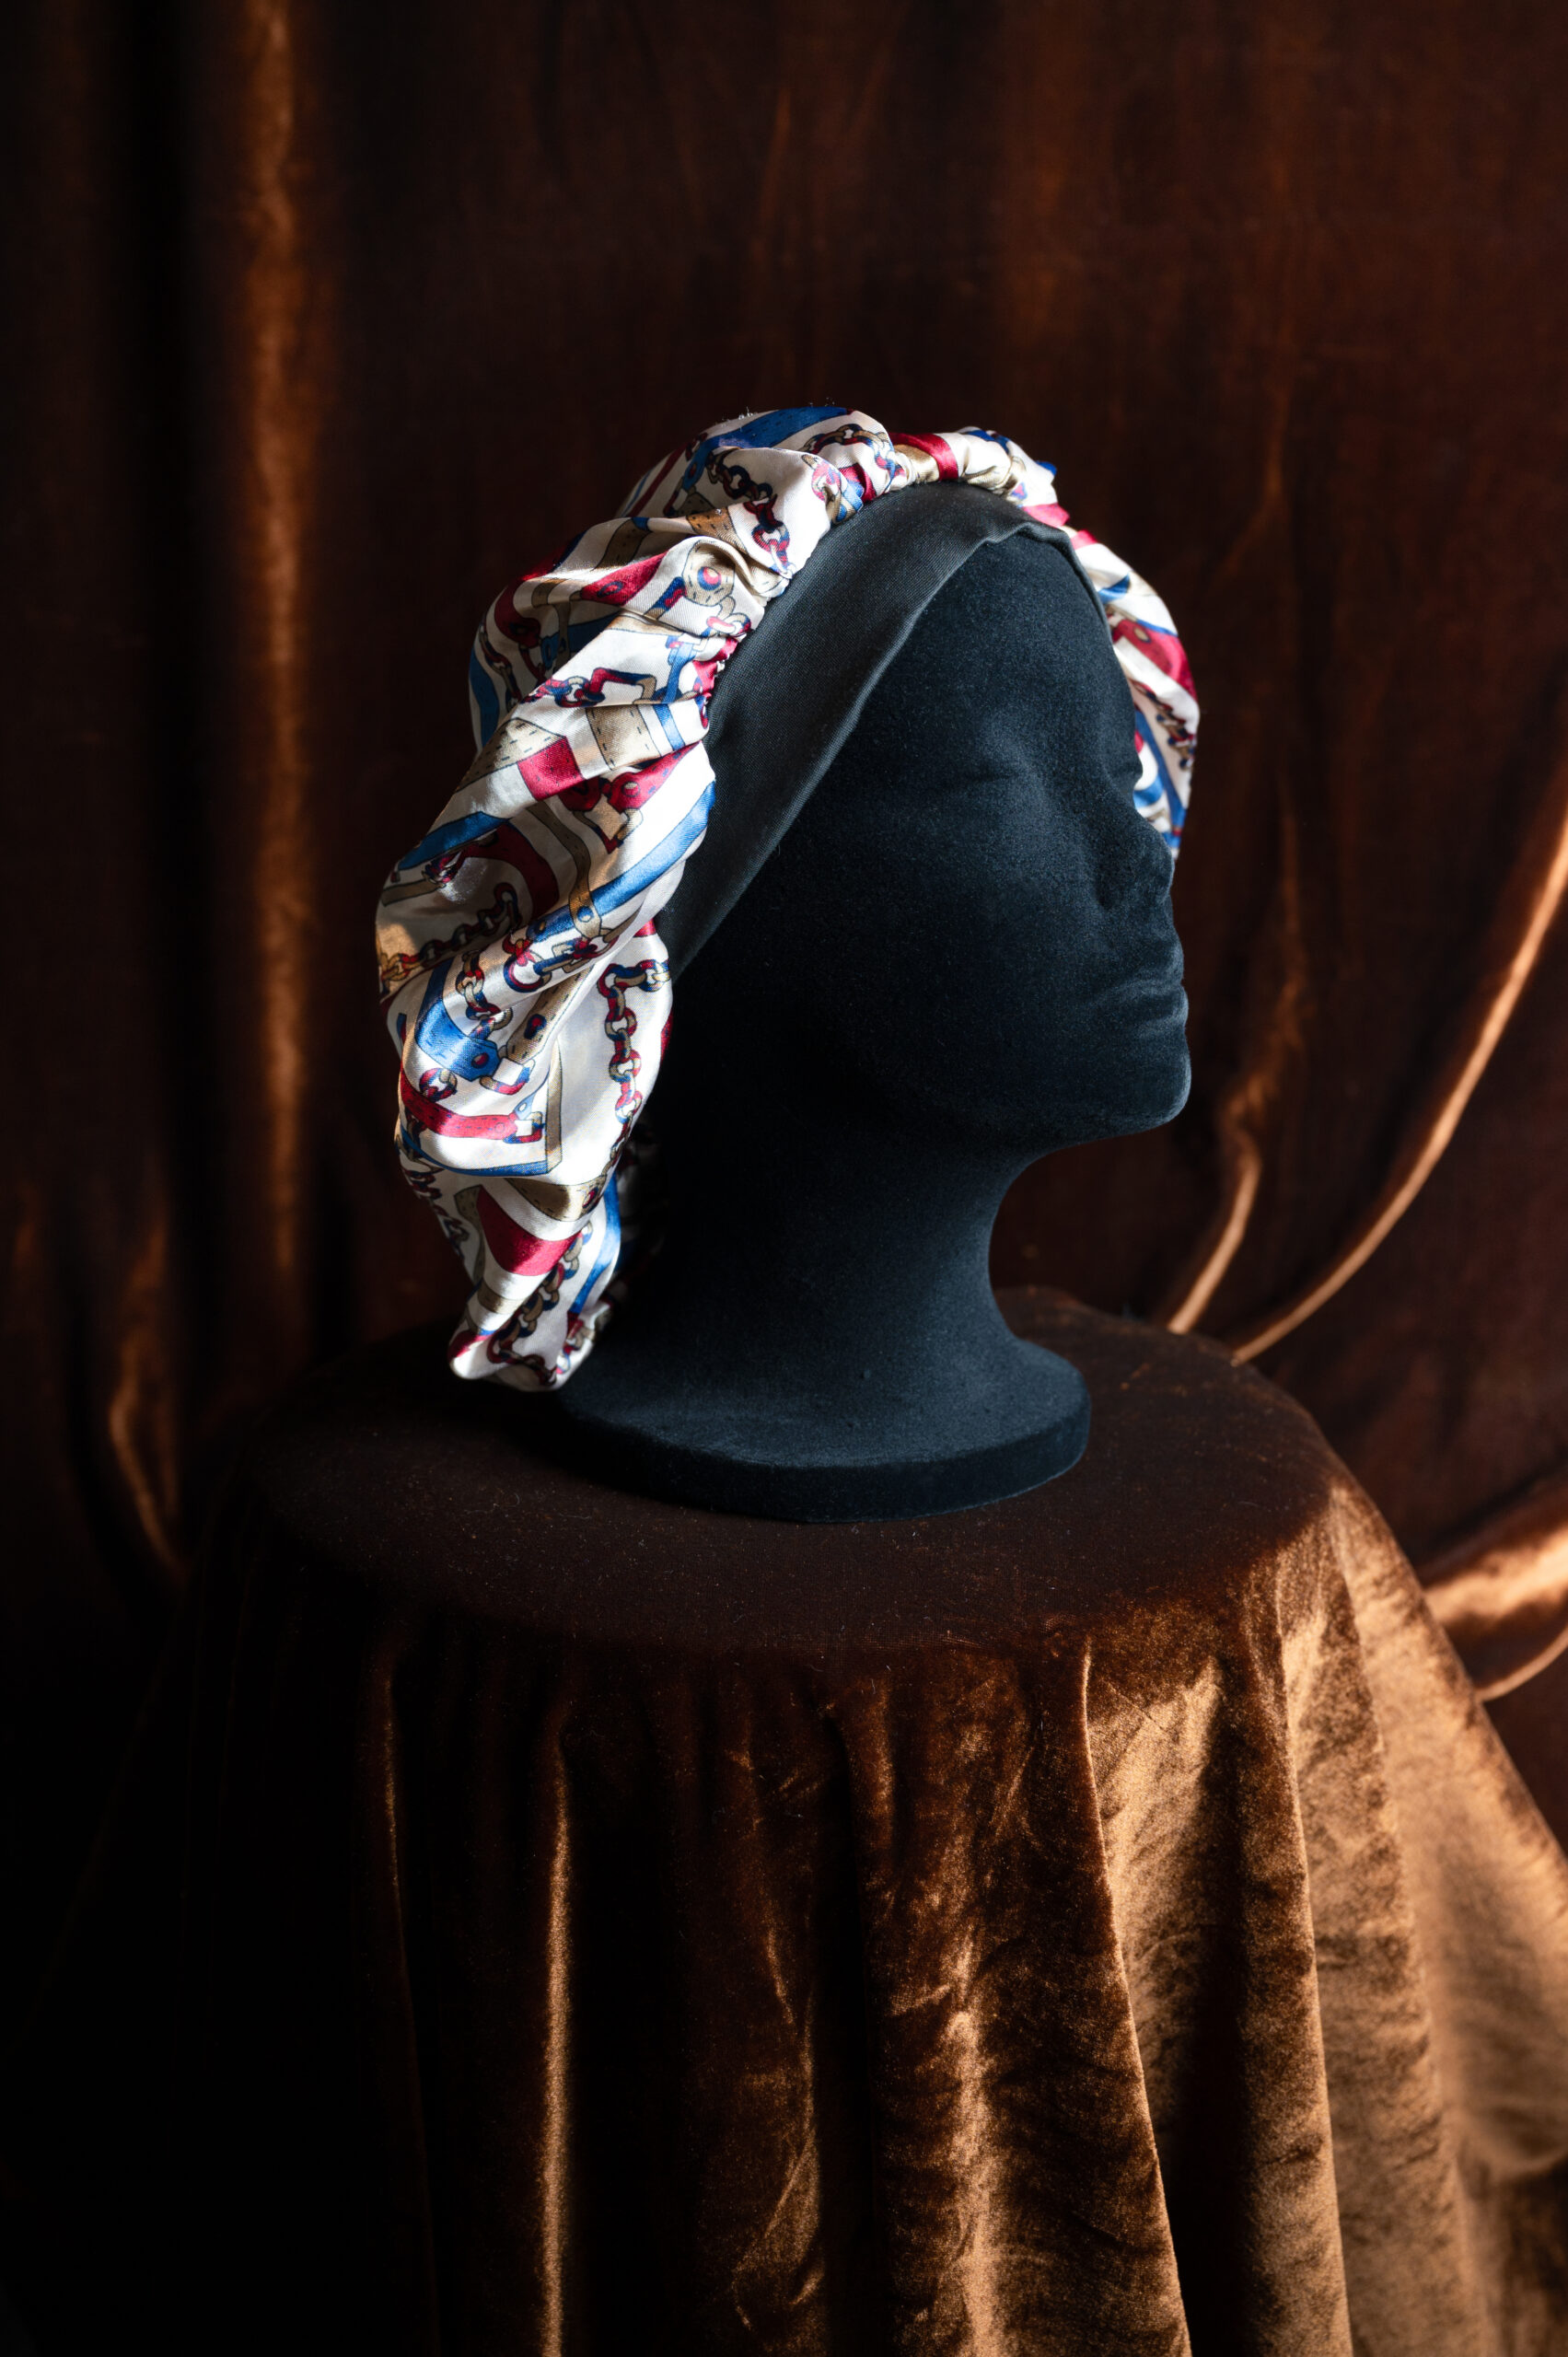 A colorful patterned bonnet on a mannequin head.